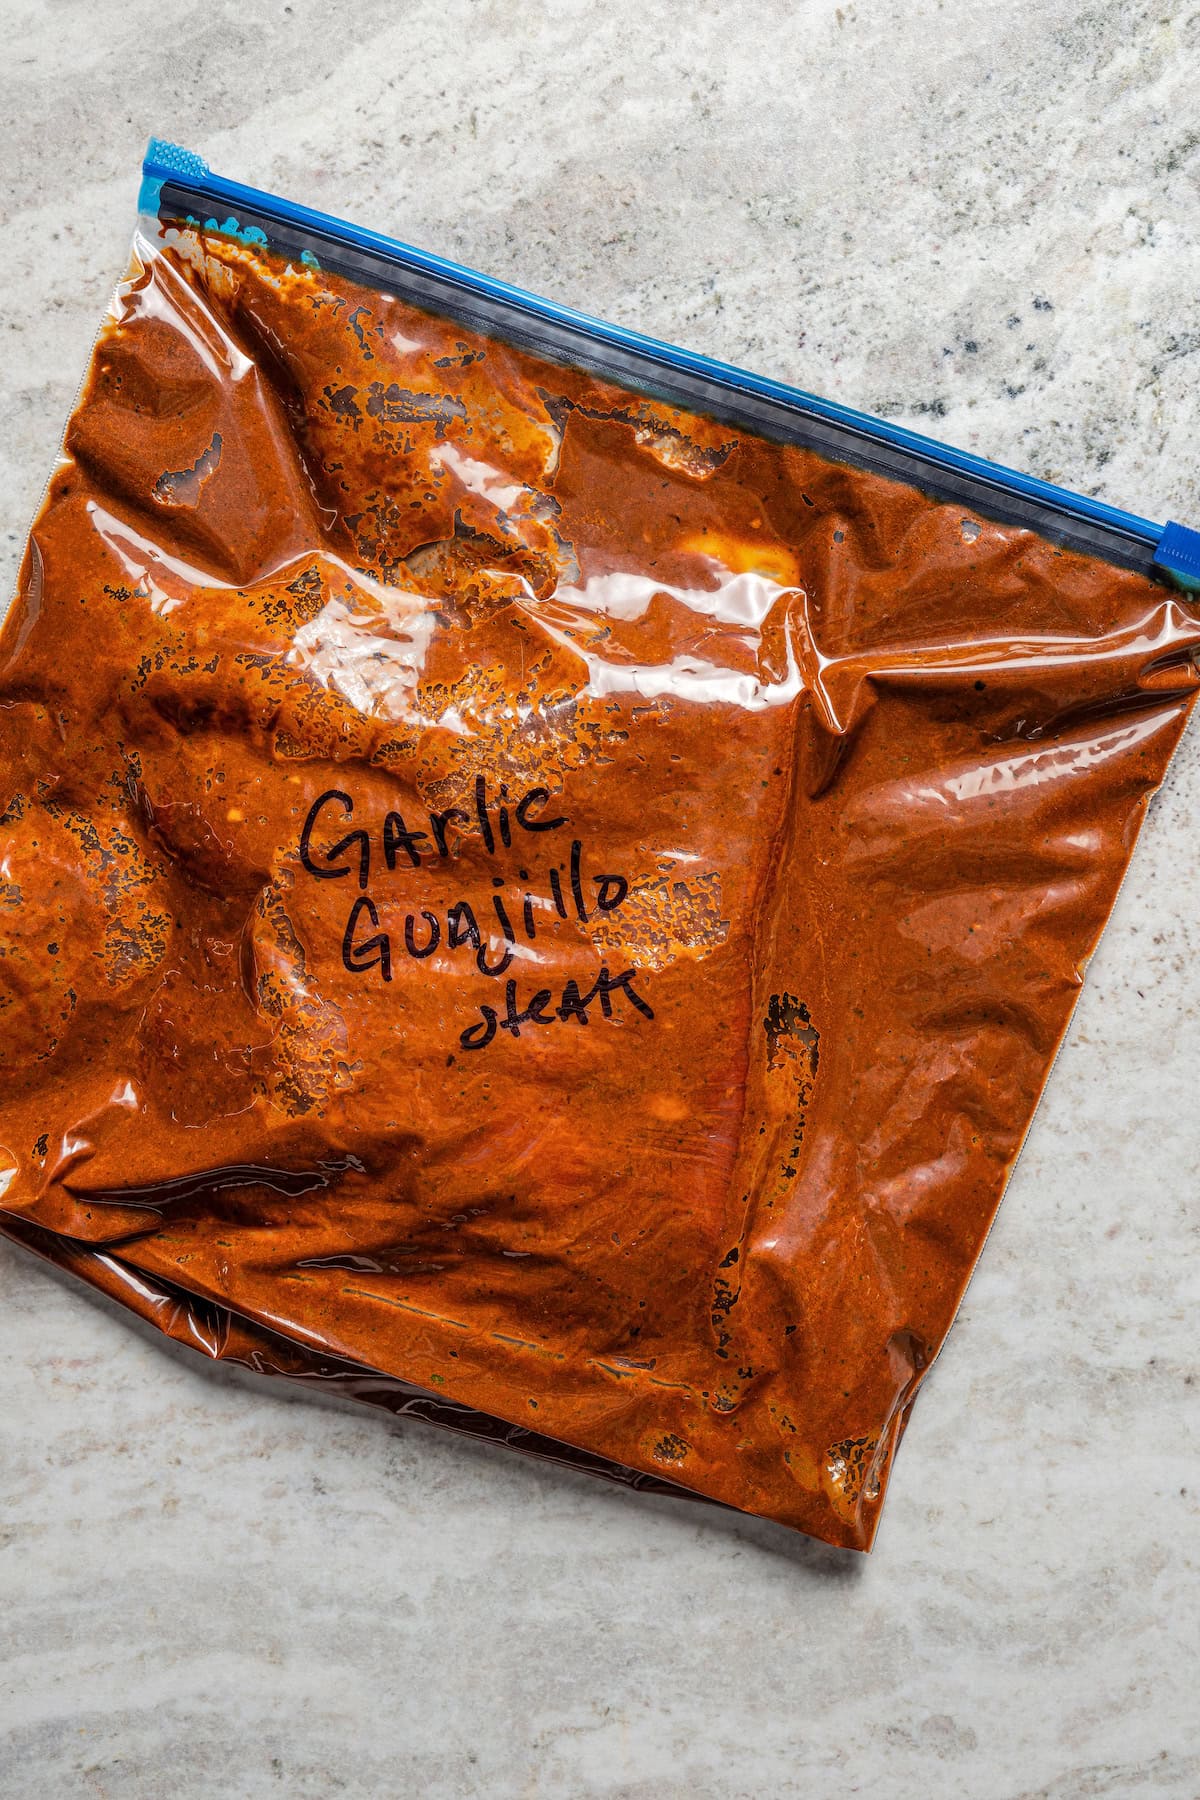 A labeled ziploc bag containing steak soaking in garlic guajillo marinade.